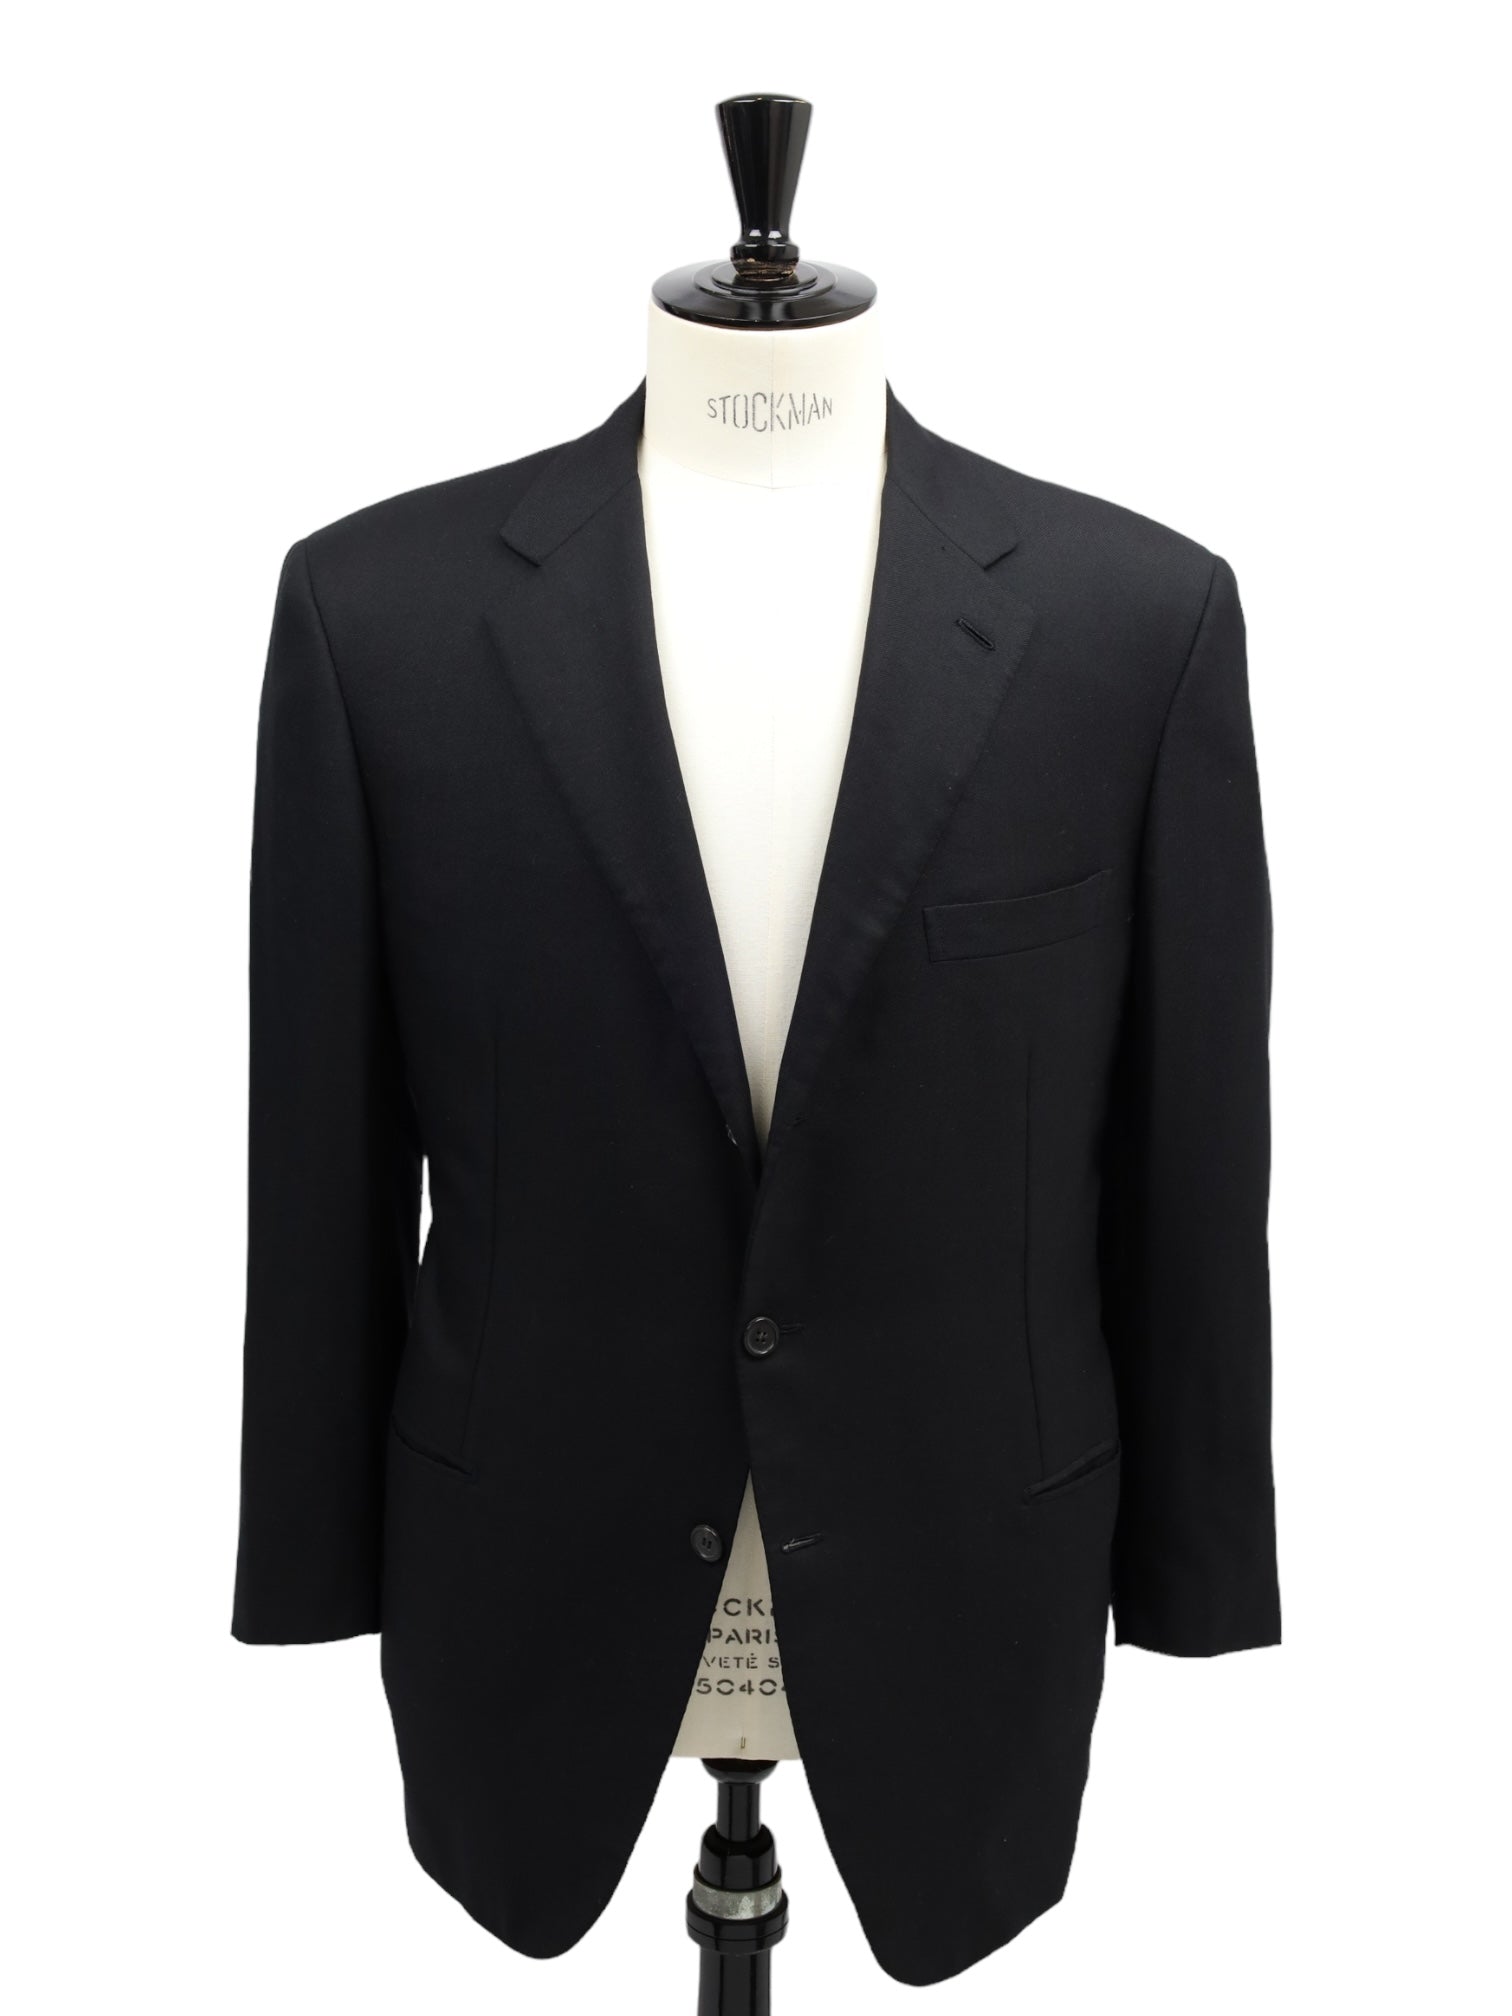 Brioni Black Cashmere Jacket